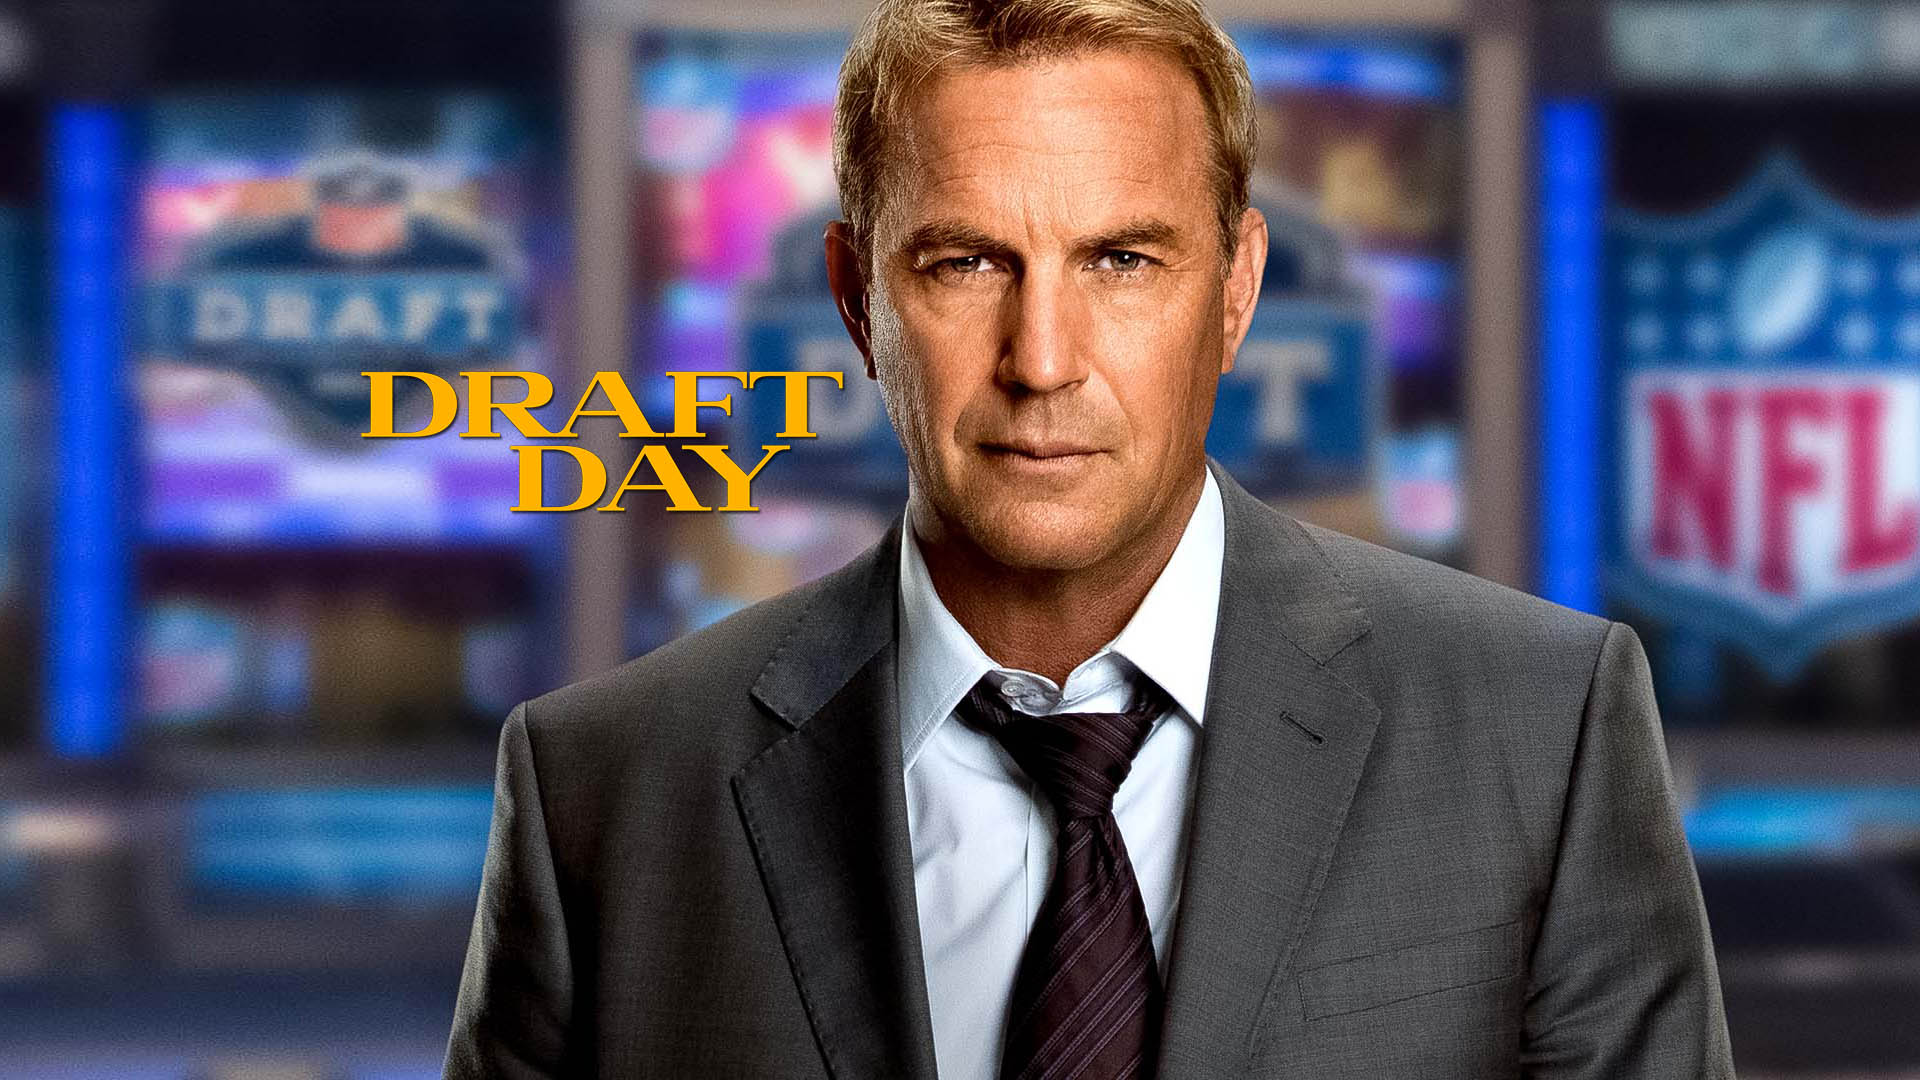 Watch Draft Day Online | Stream Full Movies